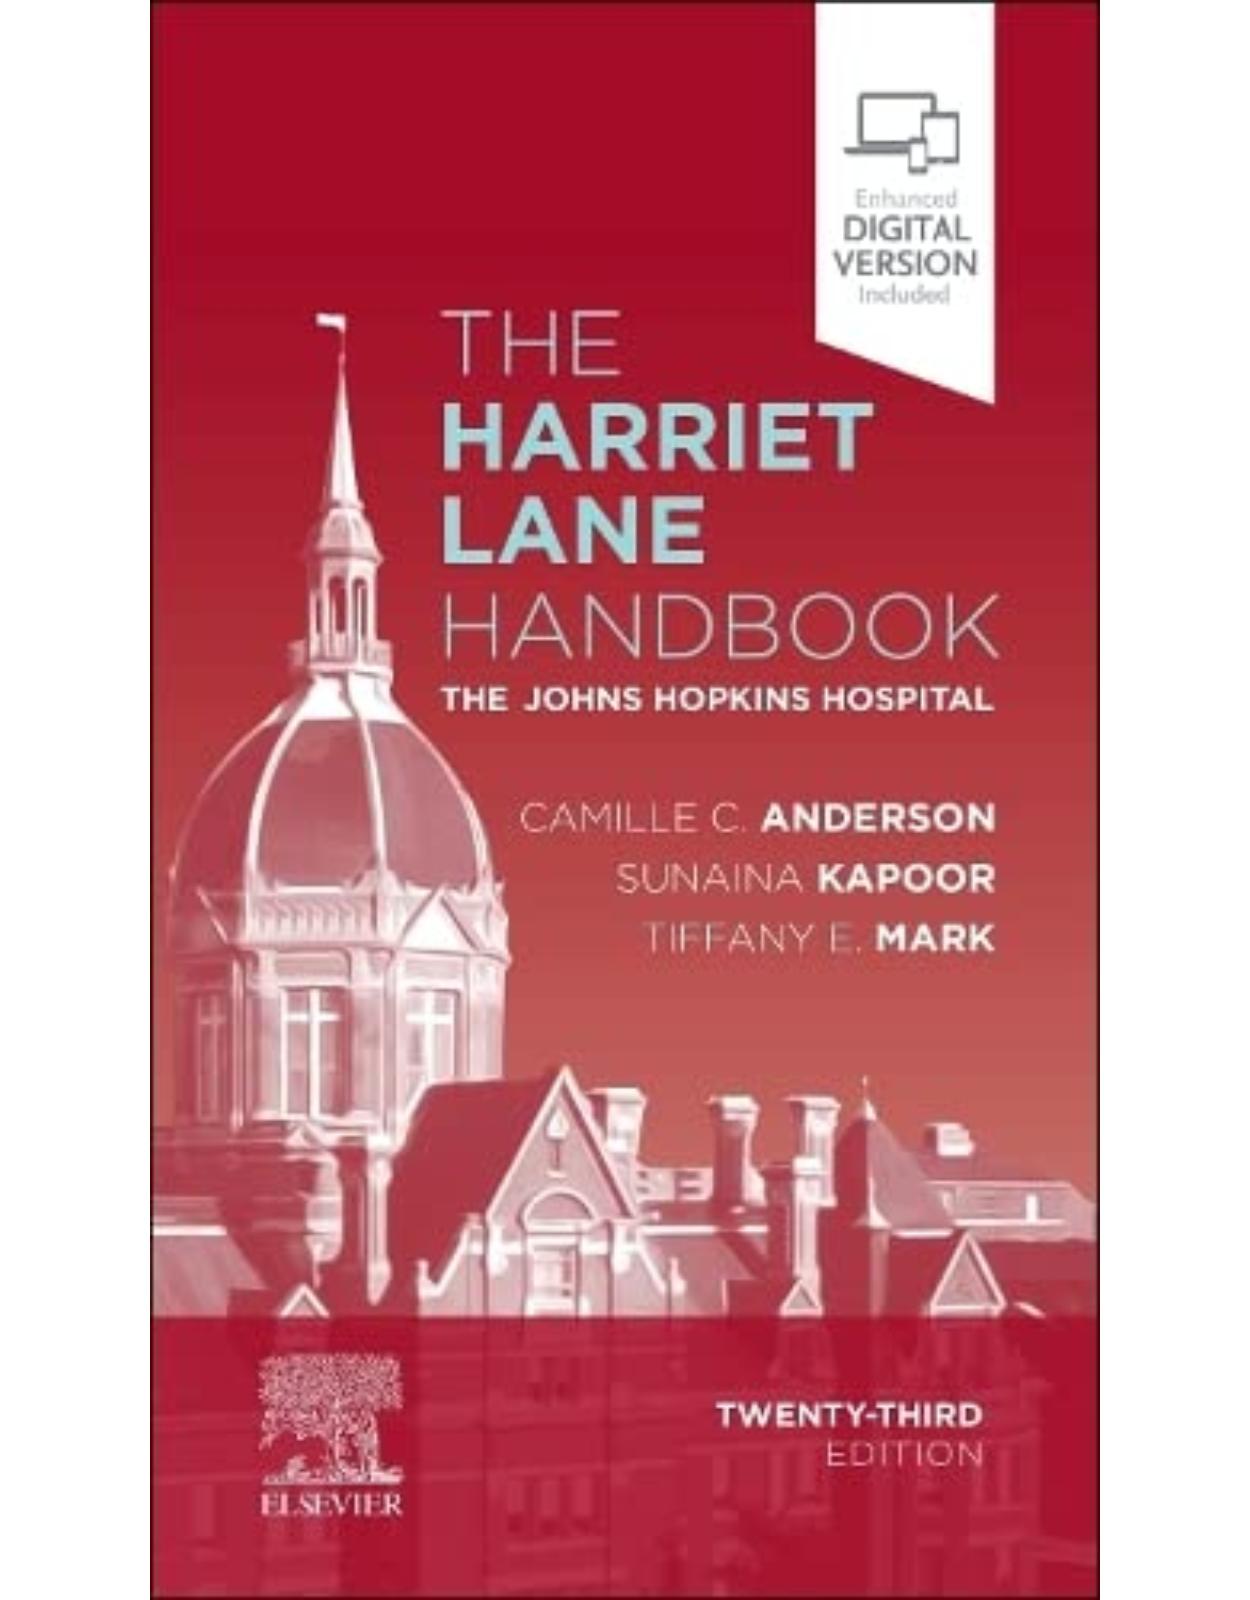 The Harriet Lane Handbook: The Johns Hopkins Hospital